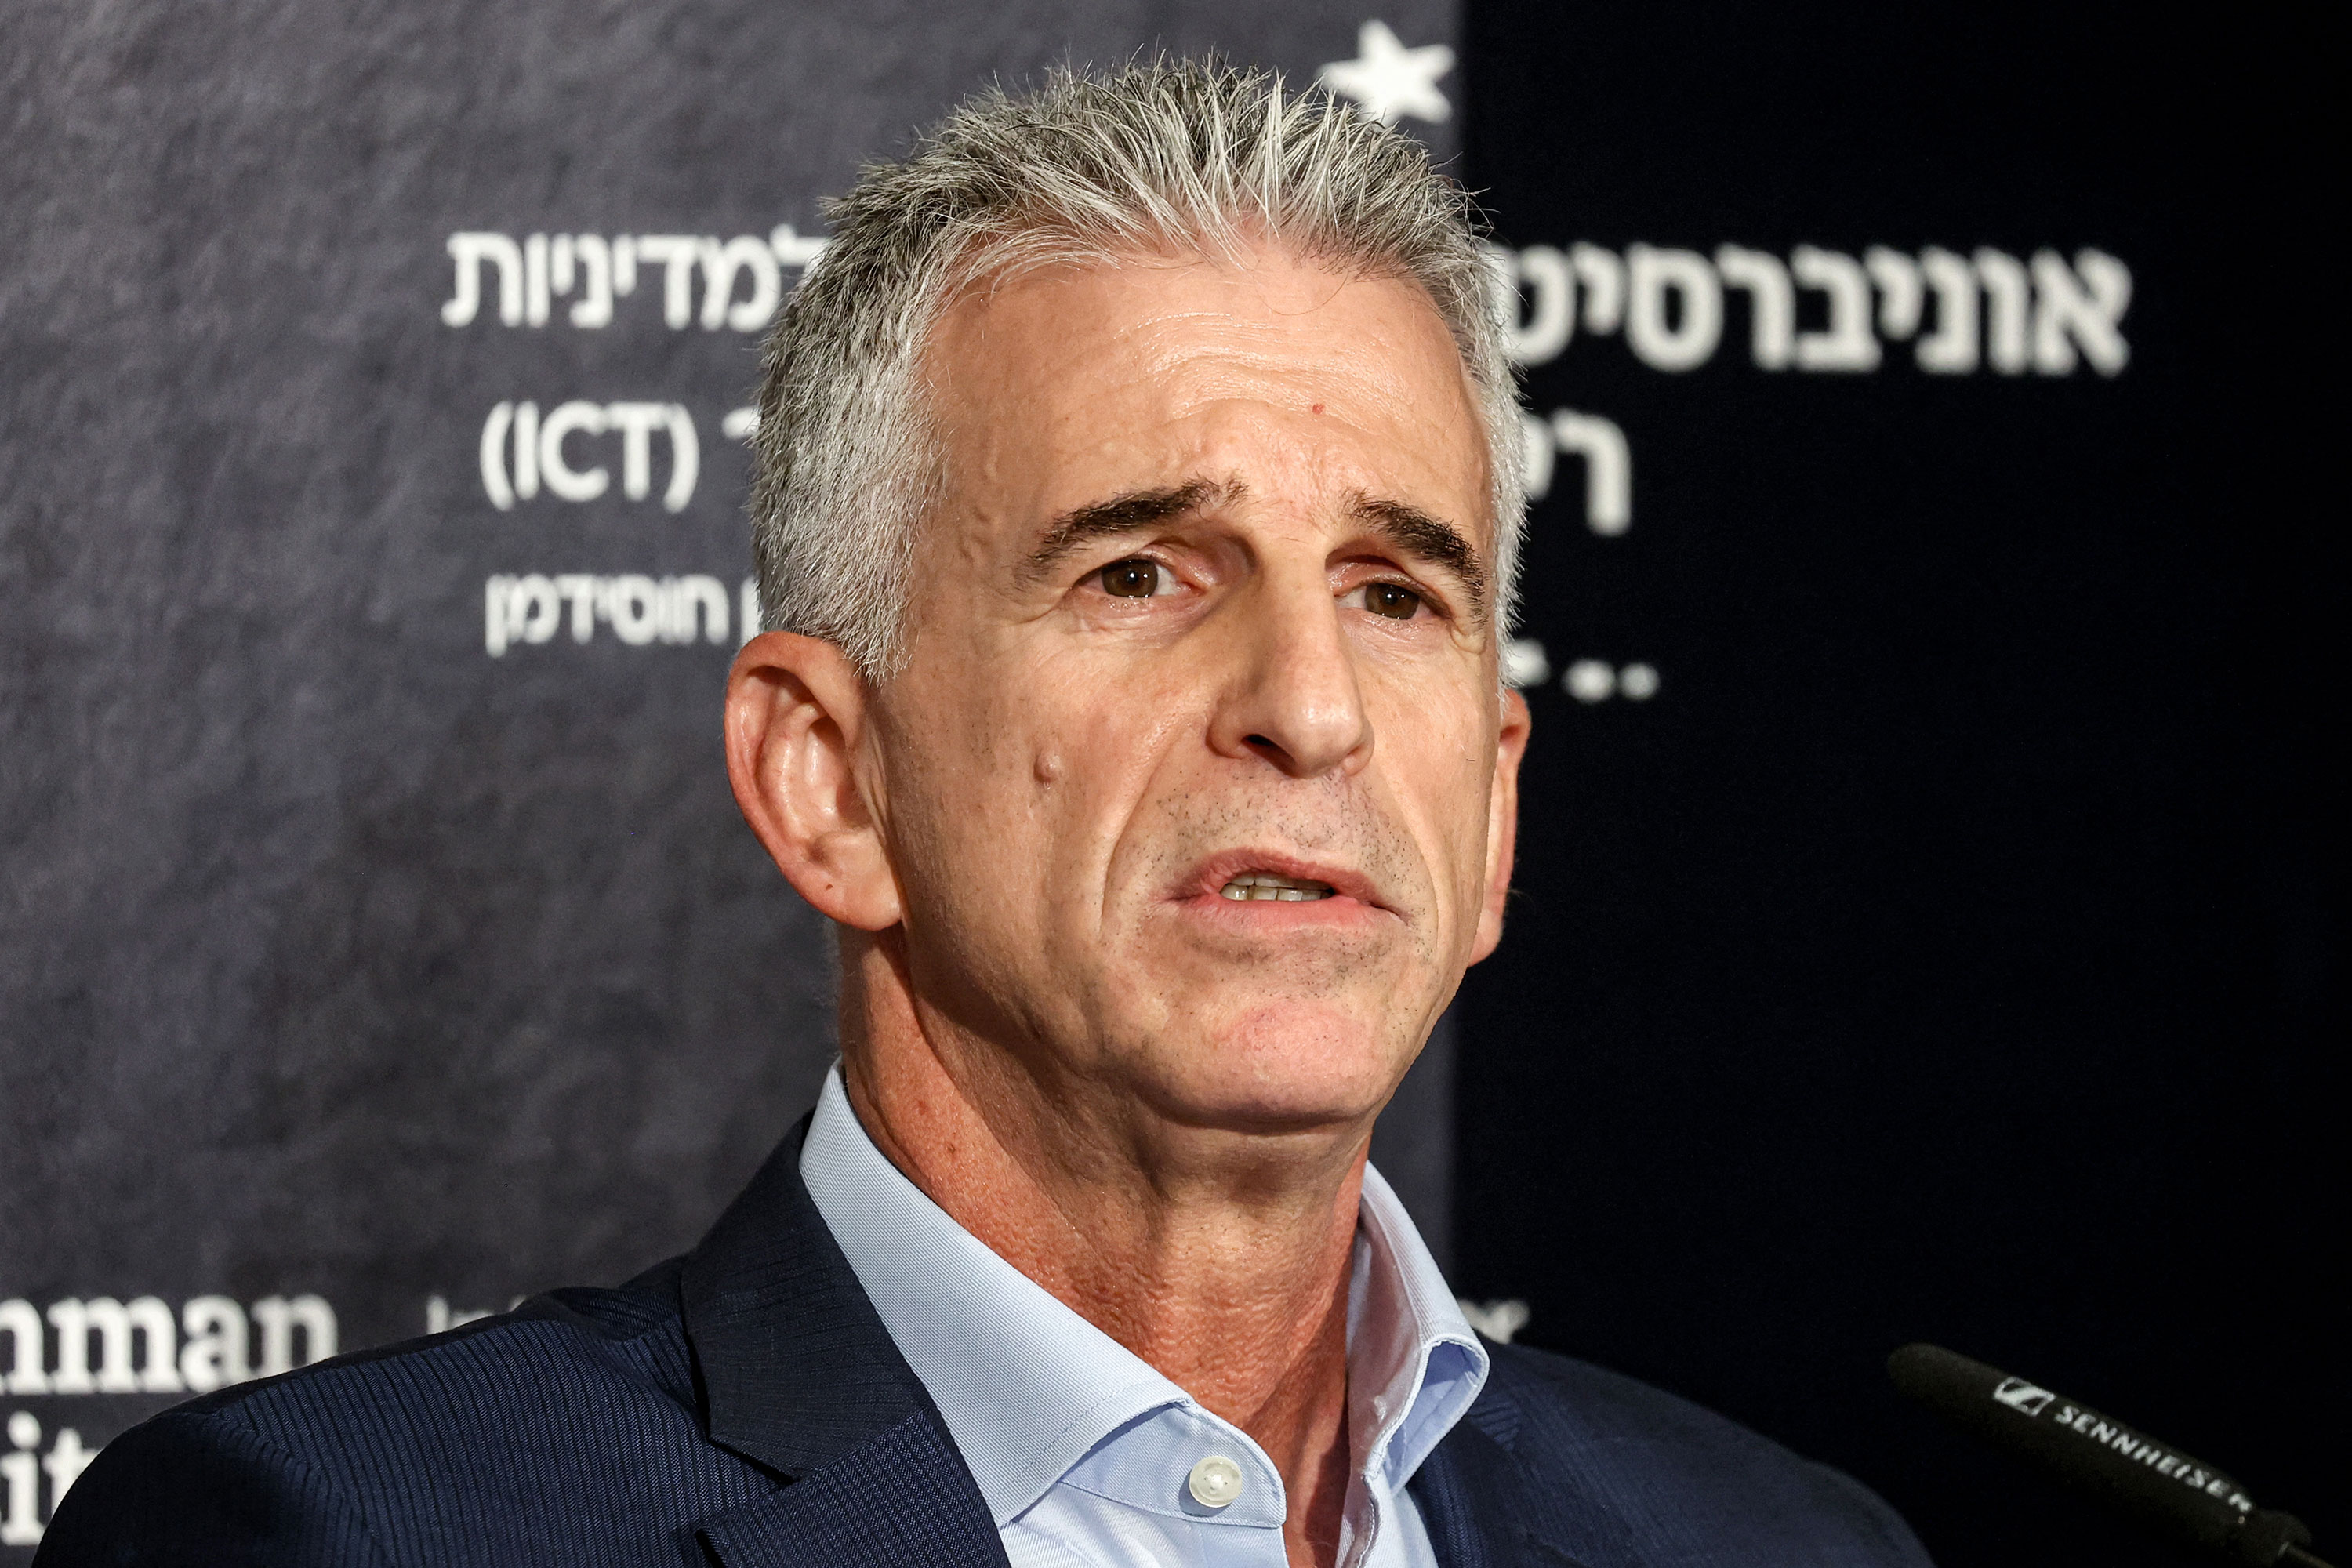 Mossad Director David Barnea speaks at a summit in Herzliya, Israel, on September 10. 